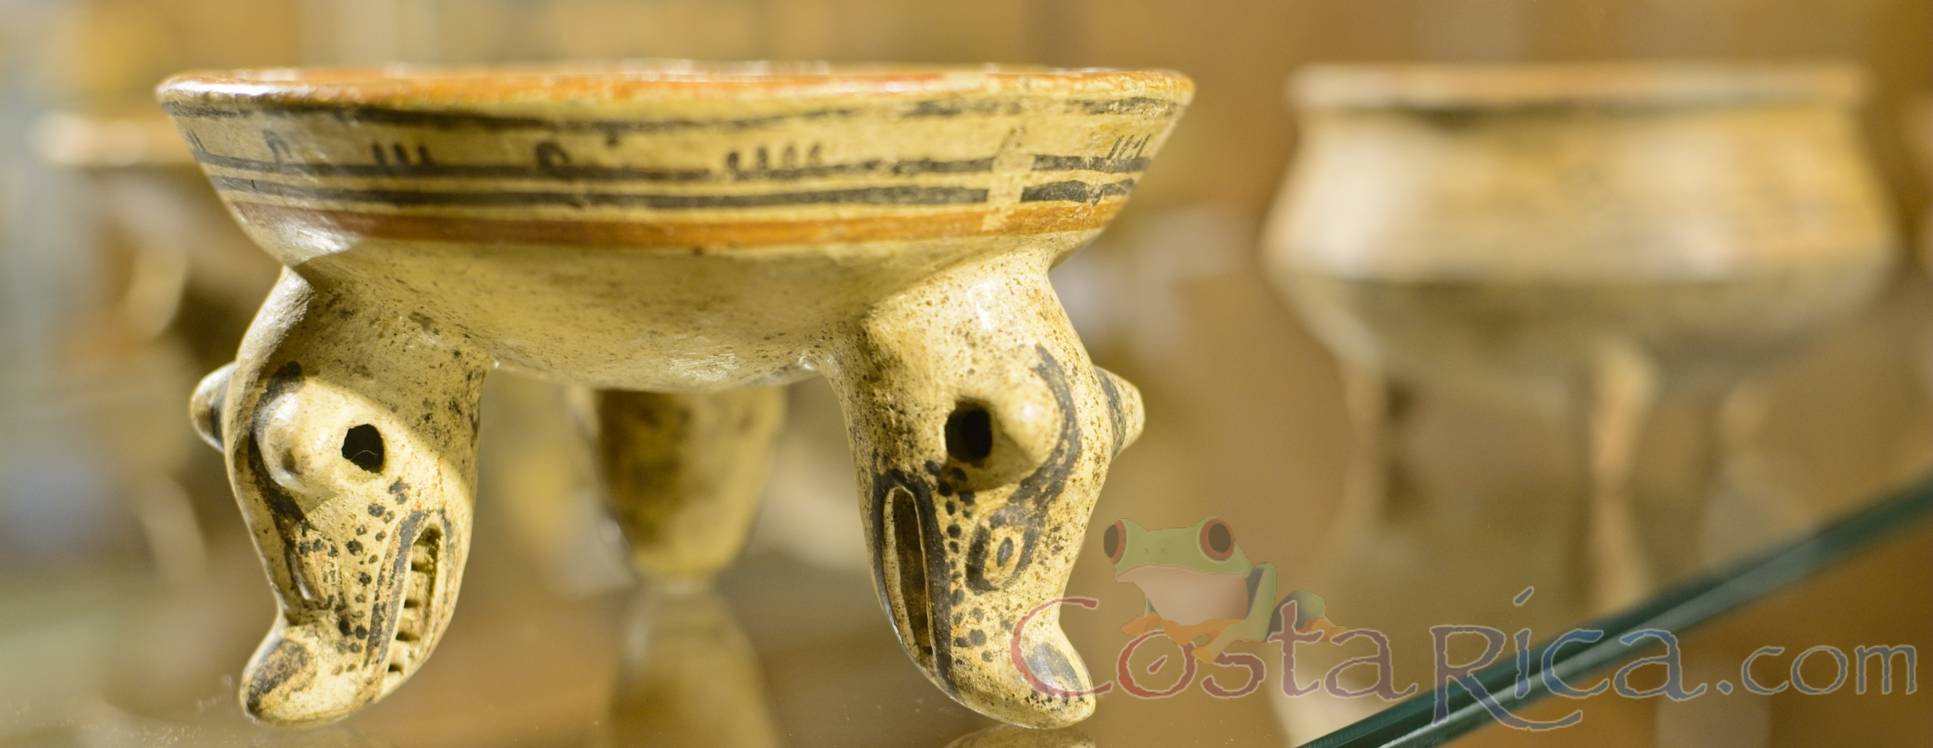        pottery jade museum
  - Costa Rica